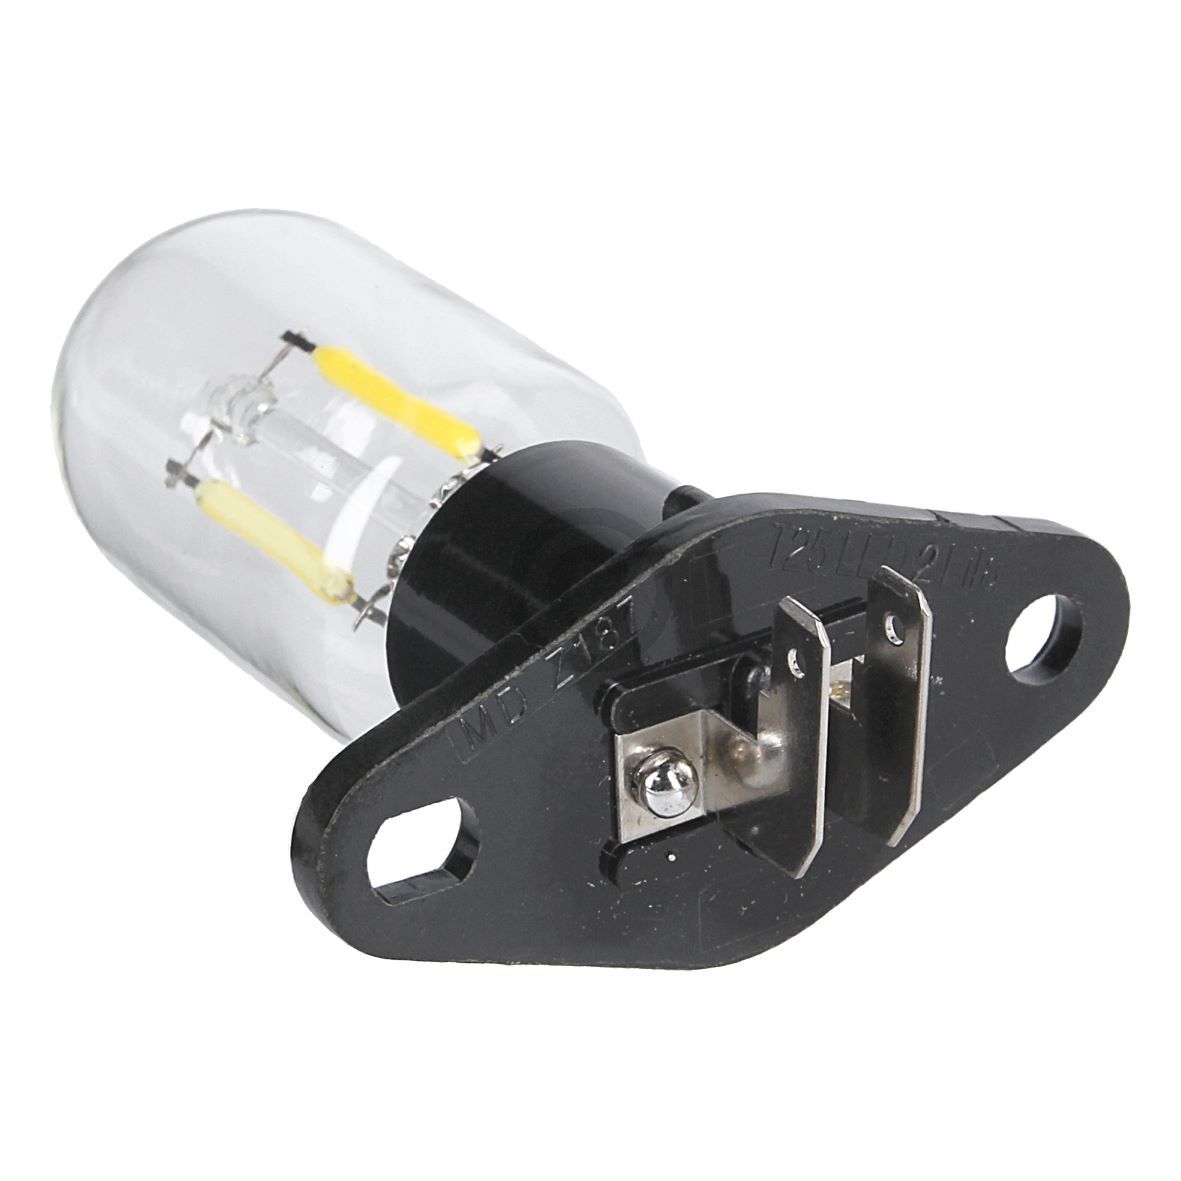 Lampe LED T25 kompatibel mit BOSCH 10011653 für Mikrowelle